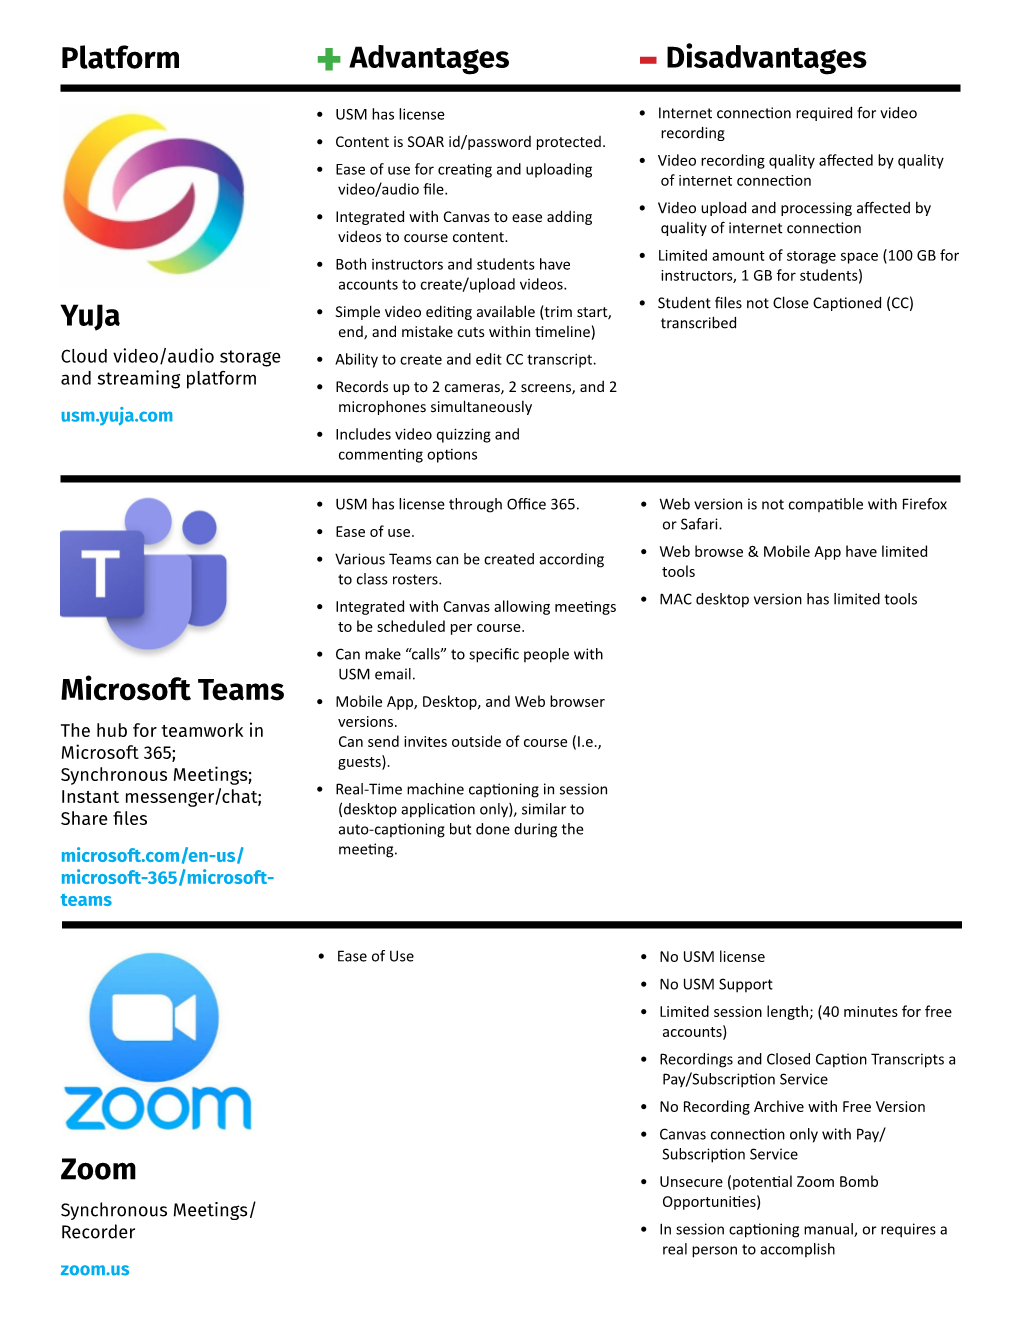 Yuja Microsoft Teams Zoom Platform +Advantages -Disadvantages